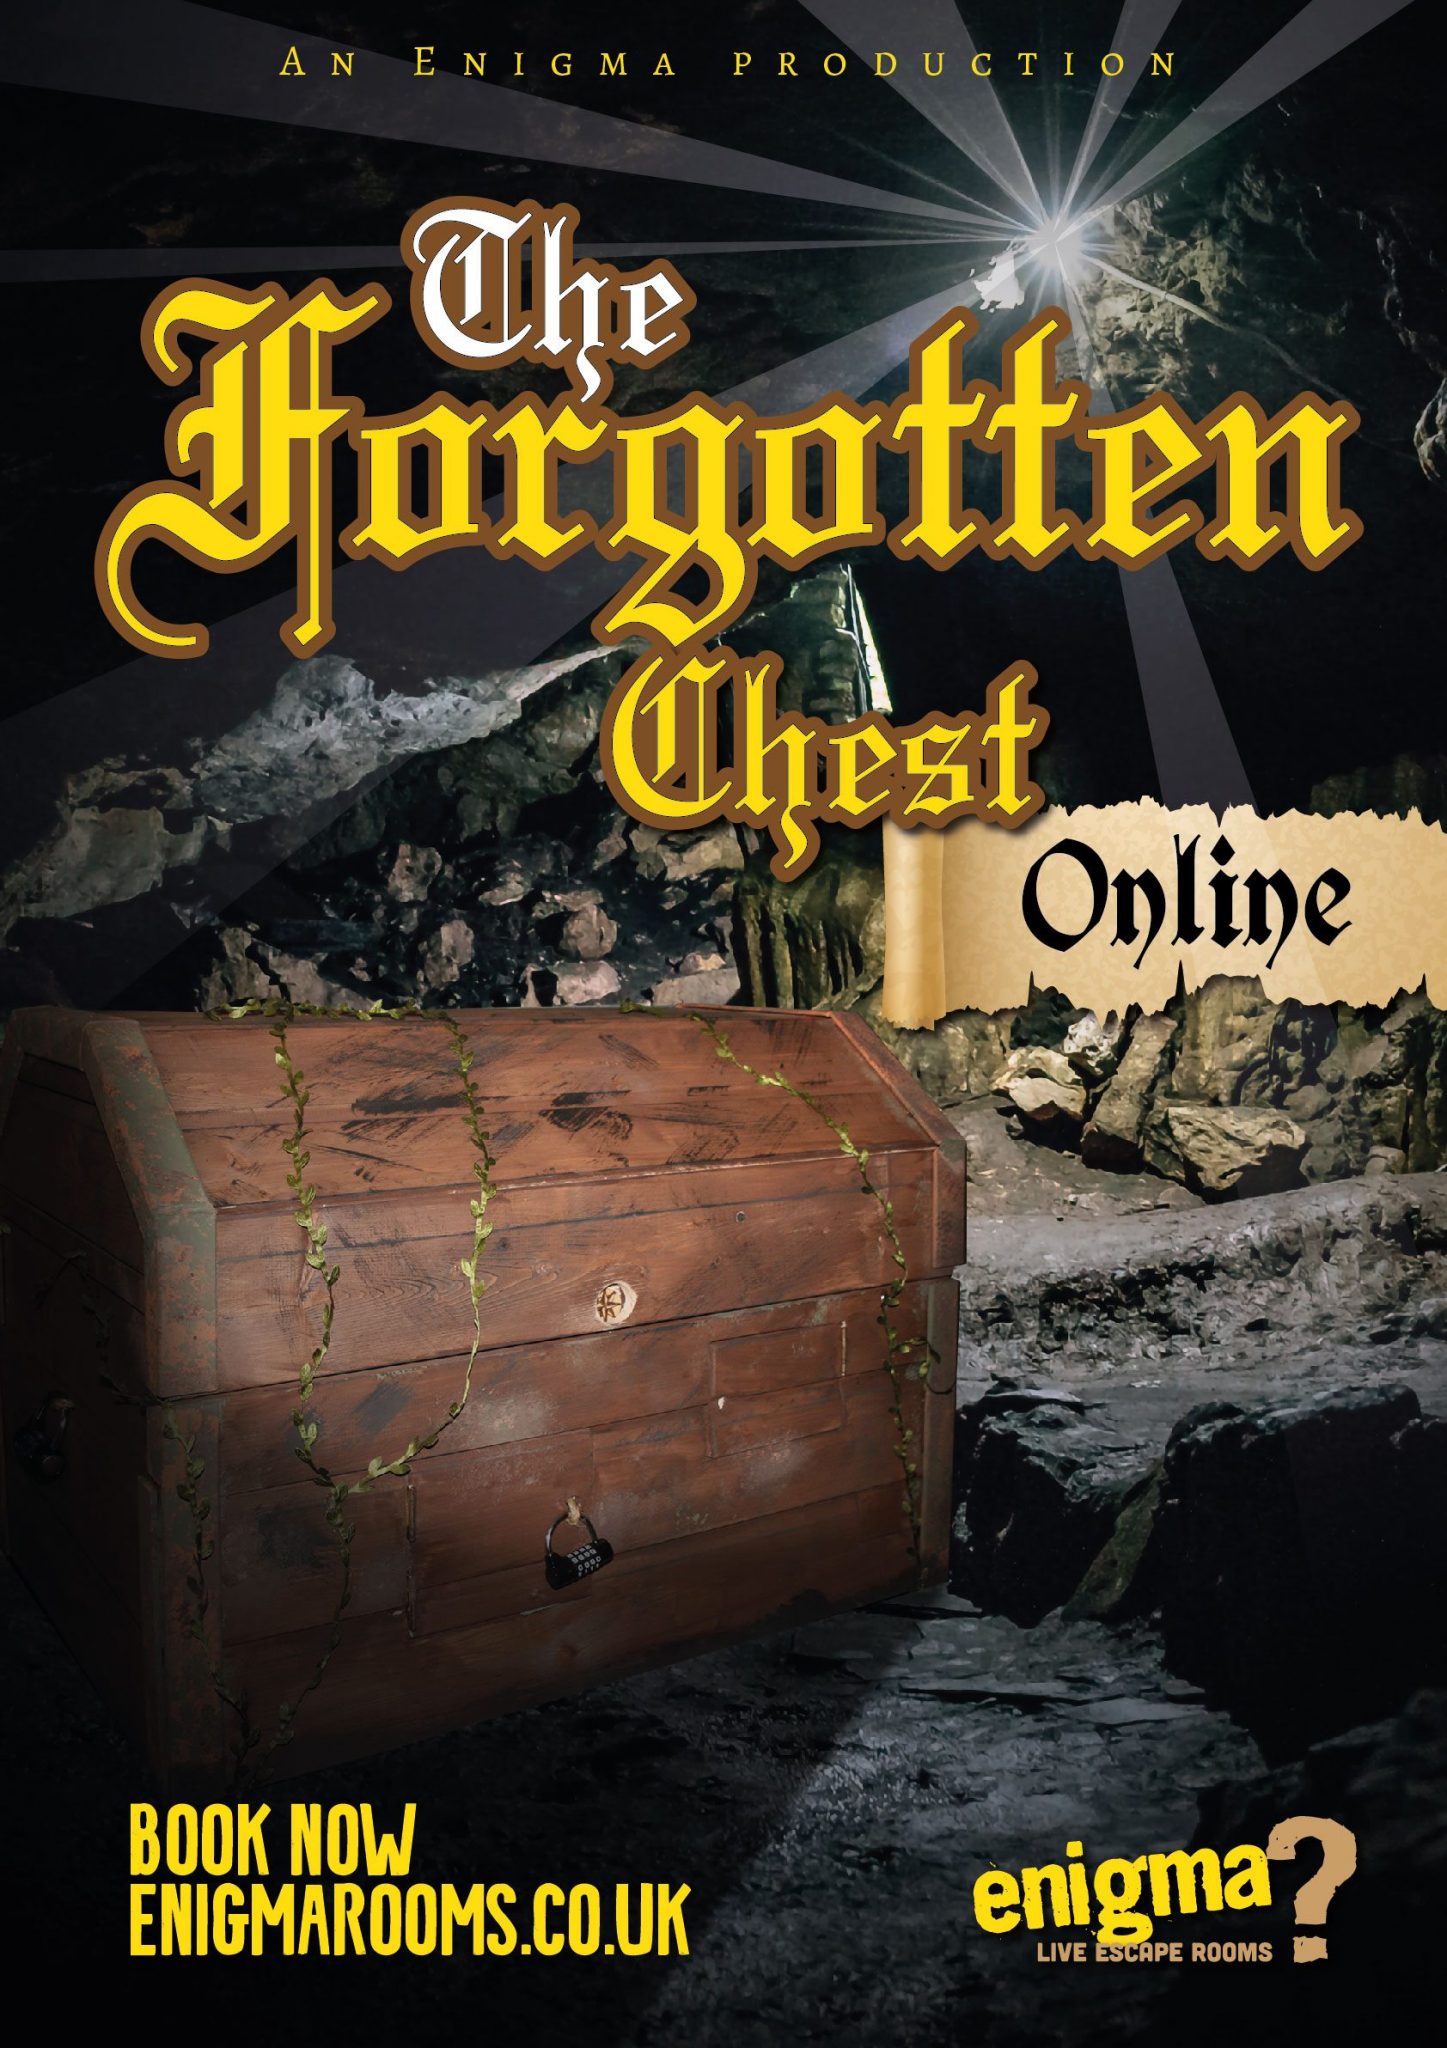 The forgotten chest